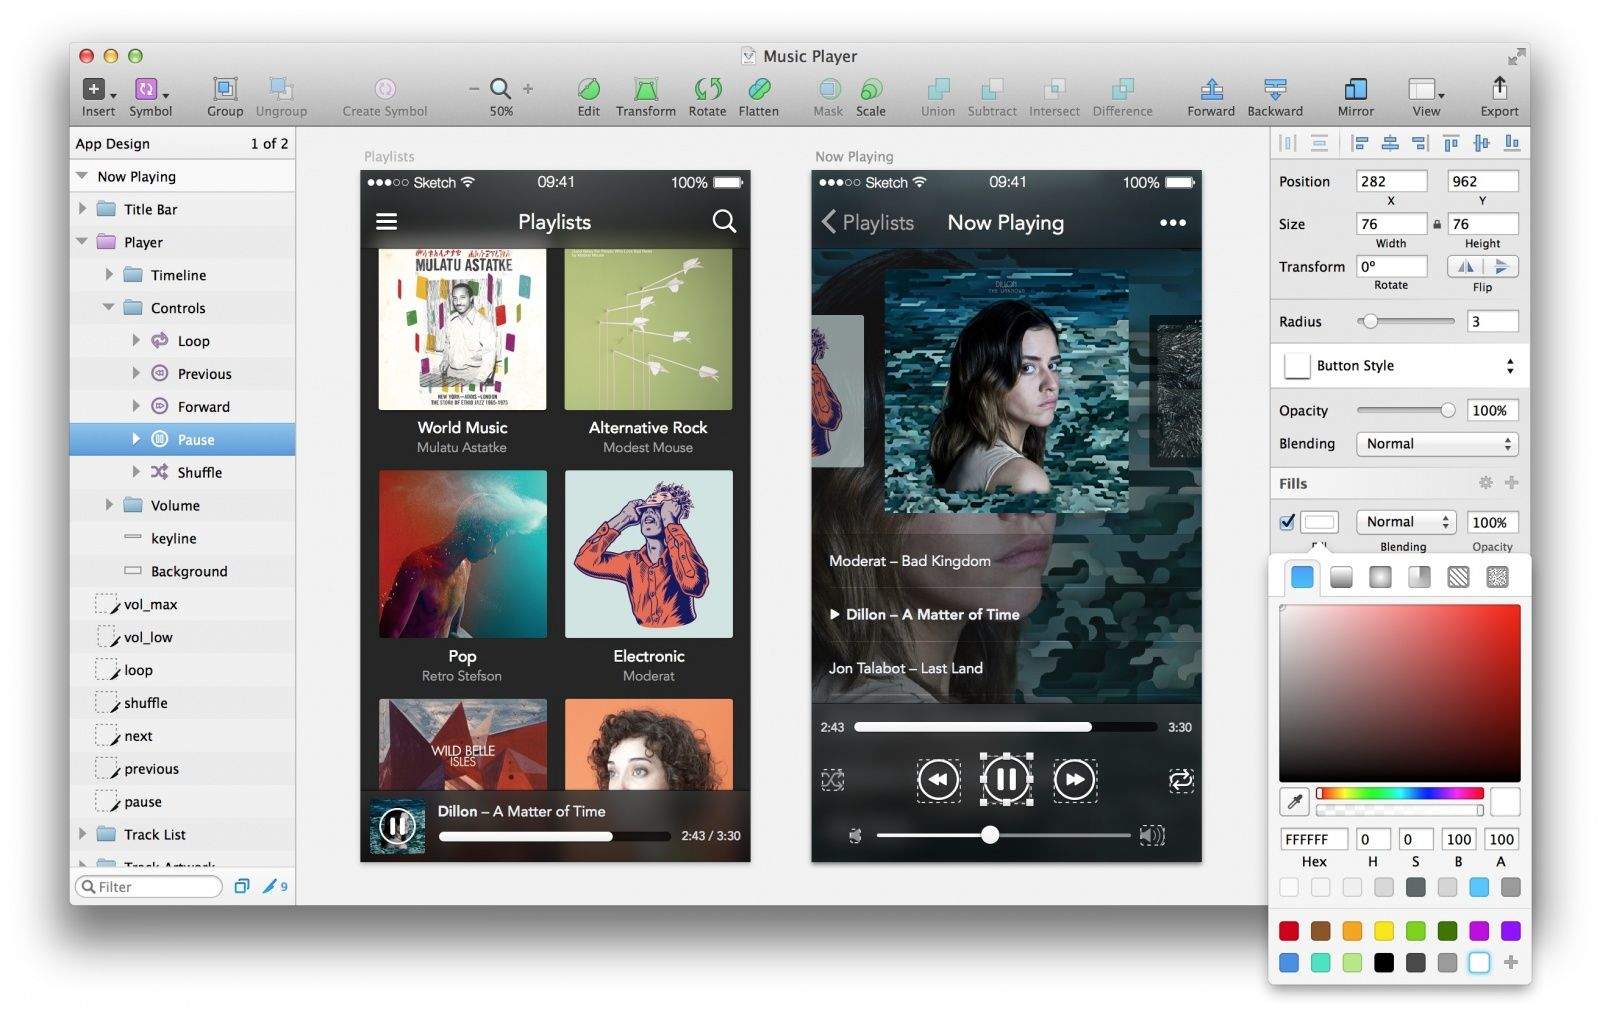 graphic design software mac free download